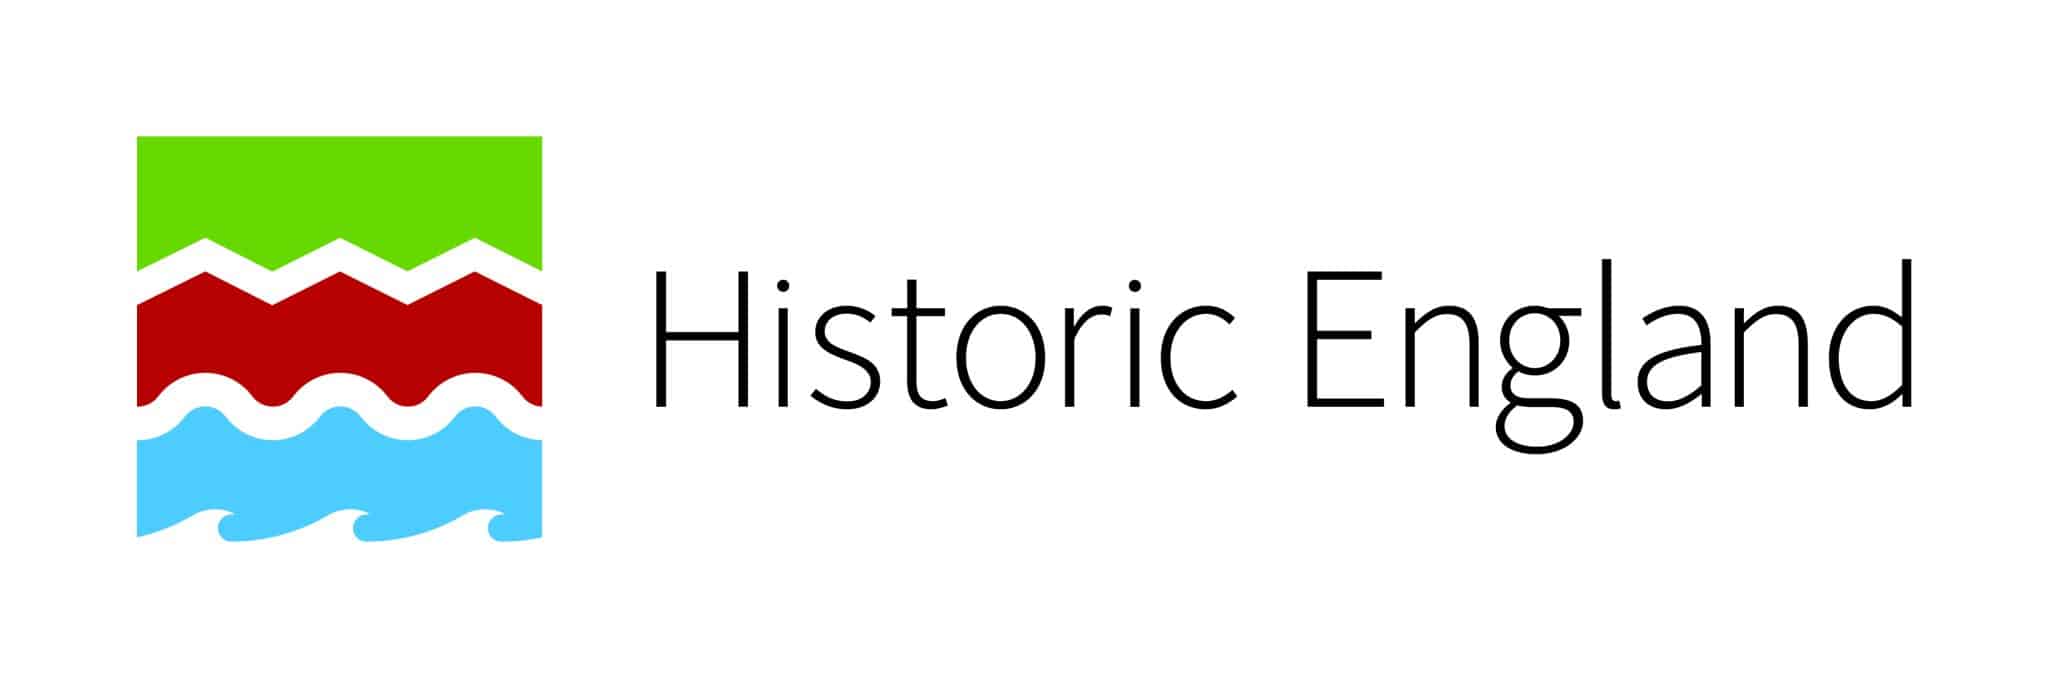 the historic england-foundation logo